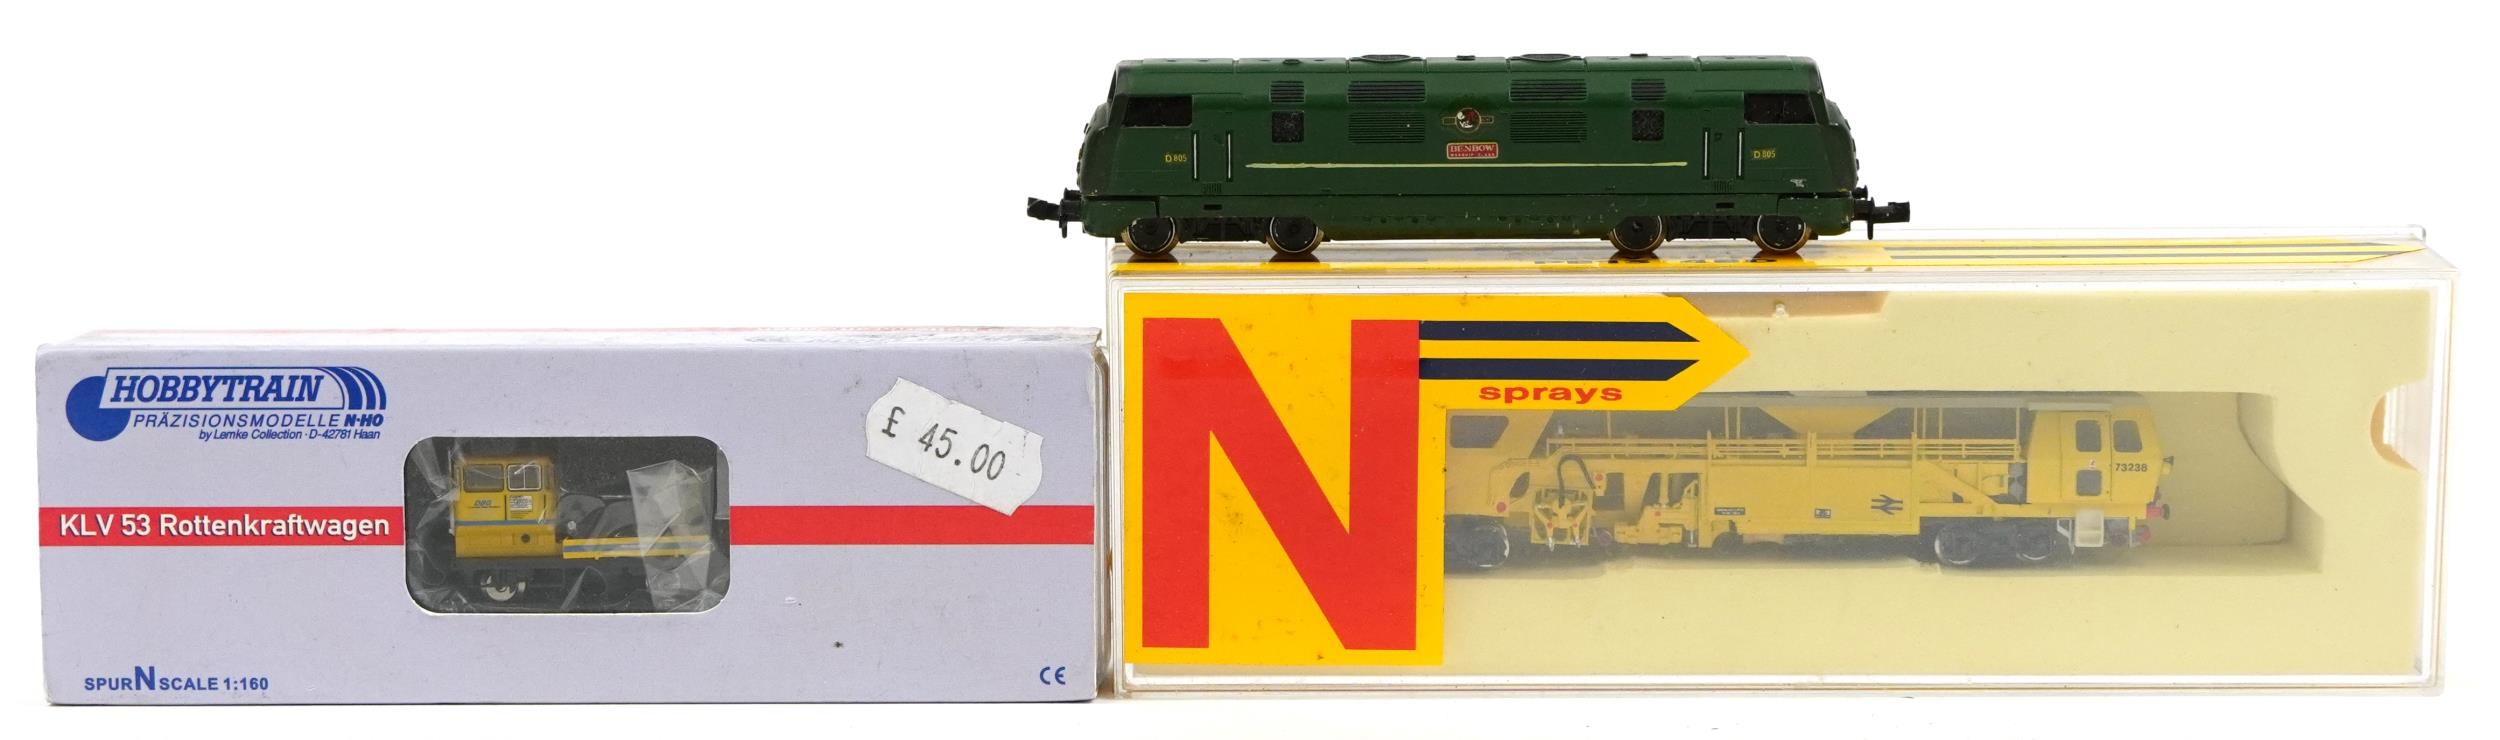 Three N gauge model railway locomotives comprising N Sprays, Hobby Train and Trix